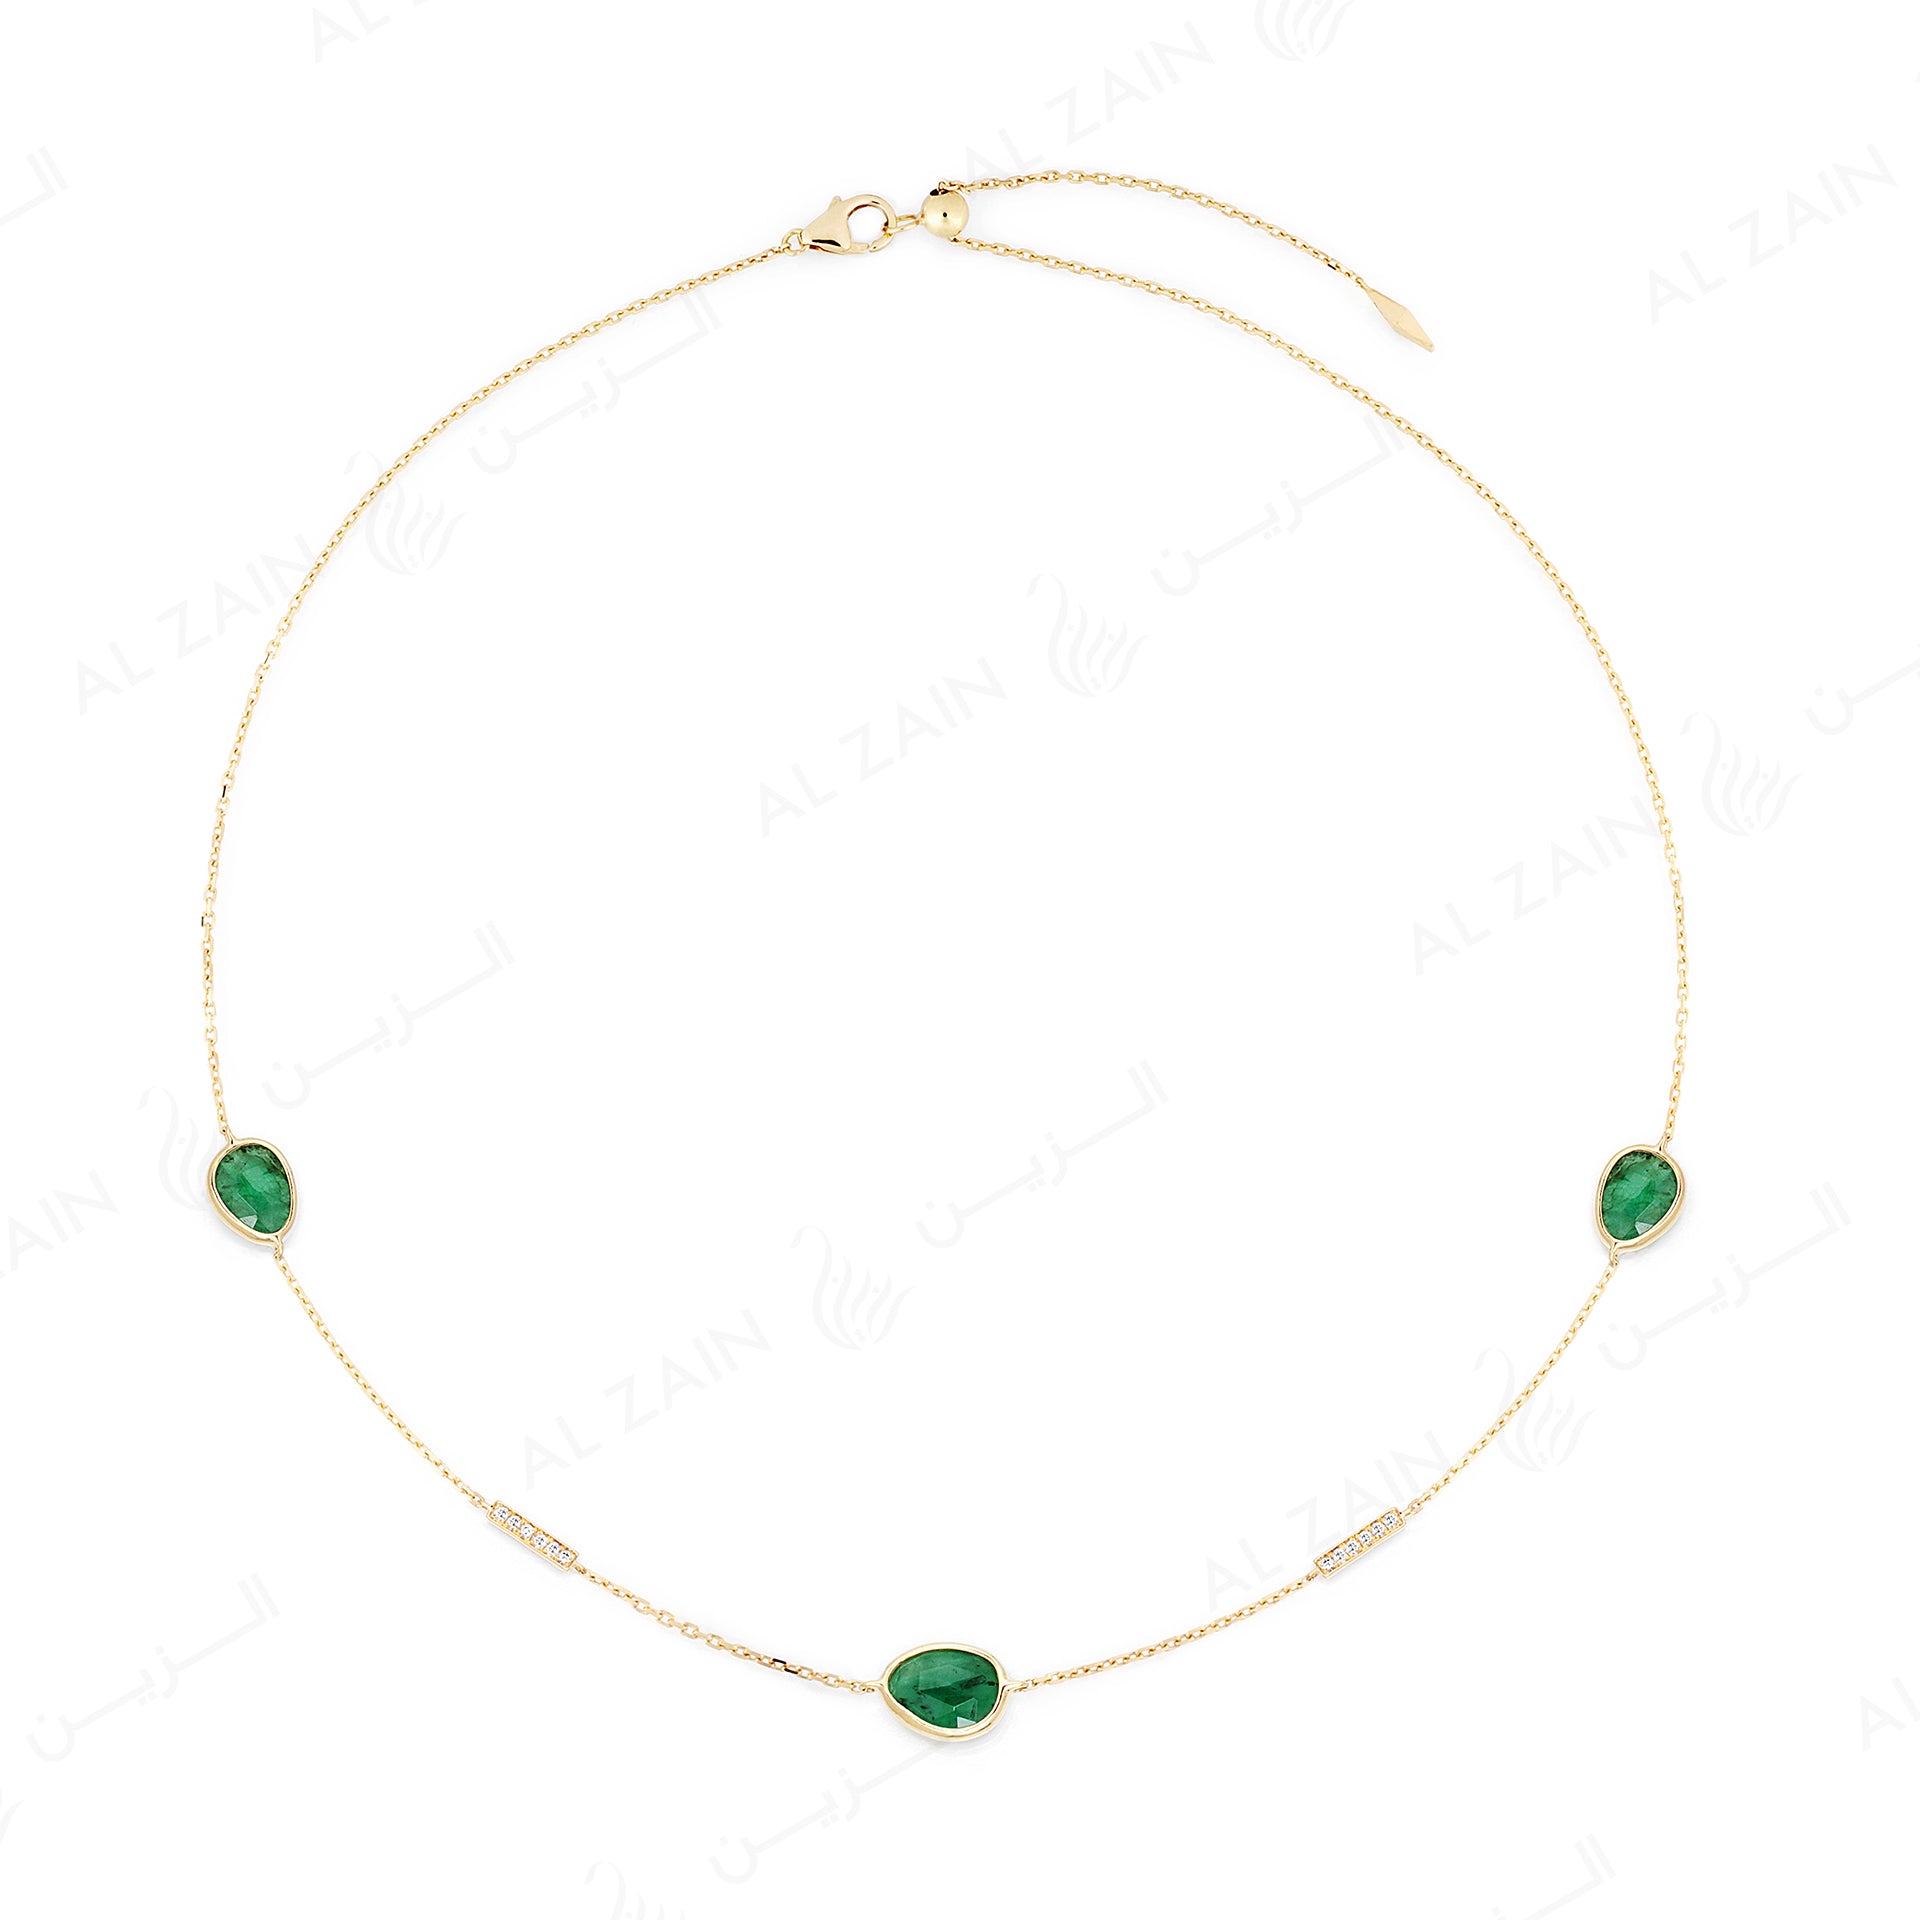 Precious Nina Choker in 18k yellow gold with Emerald stones and diamonds